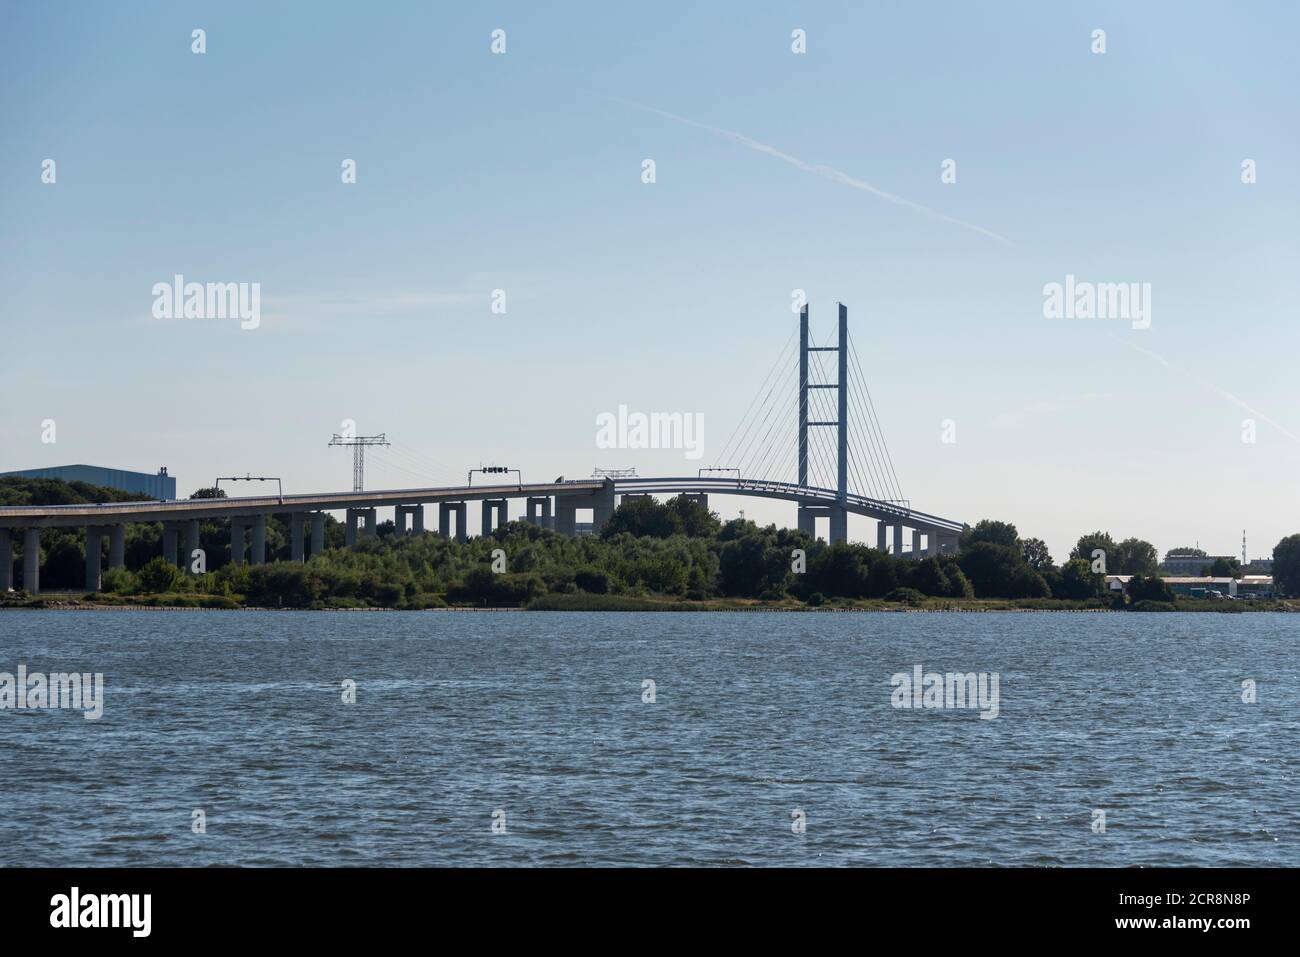 Germany, Mecklenburg-Western Pomerania, Stralsund, Rügen Bridge, crosses the Strelasund, connects the mainland with the island of Rügen, detailed Stock Photo